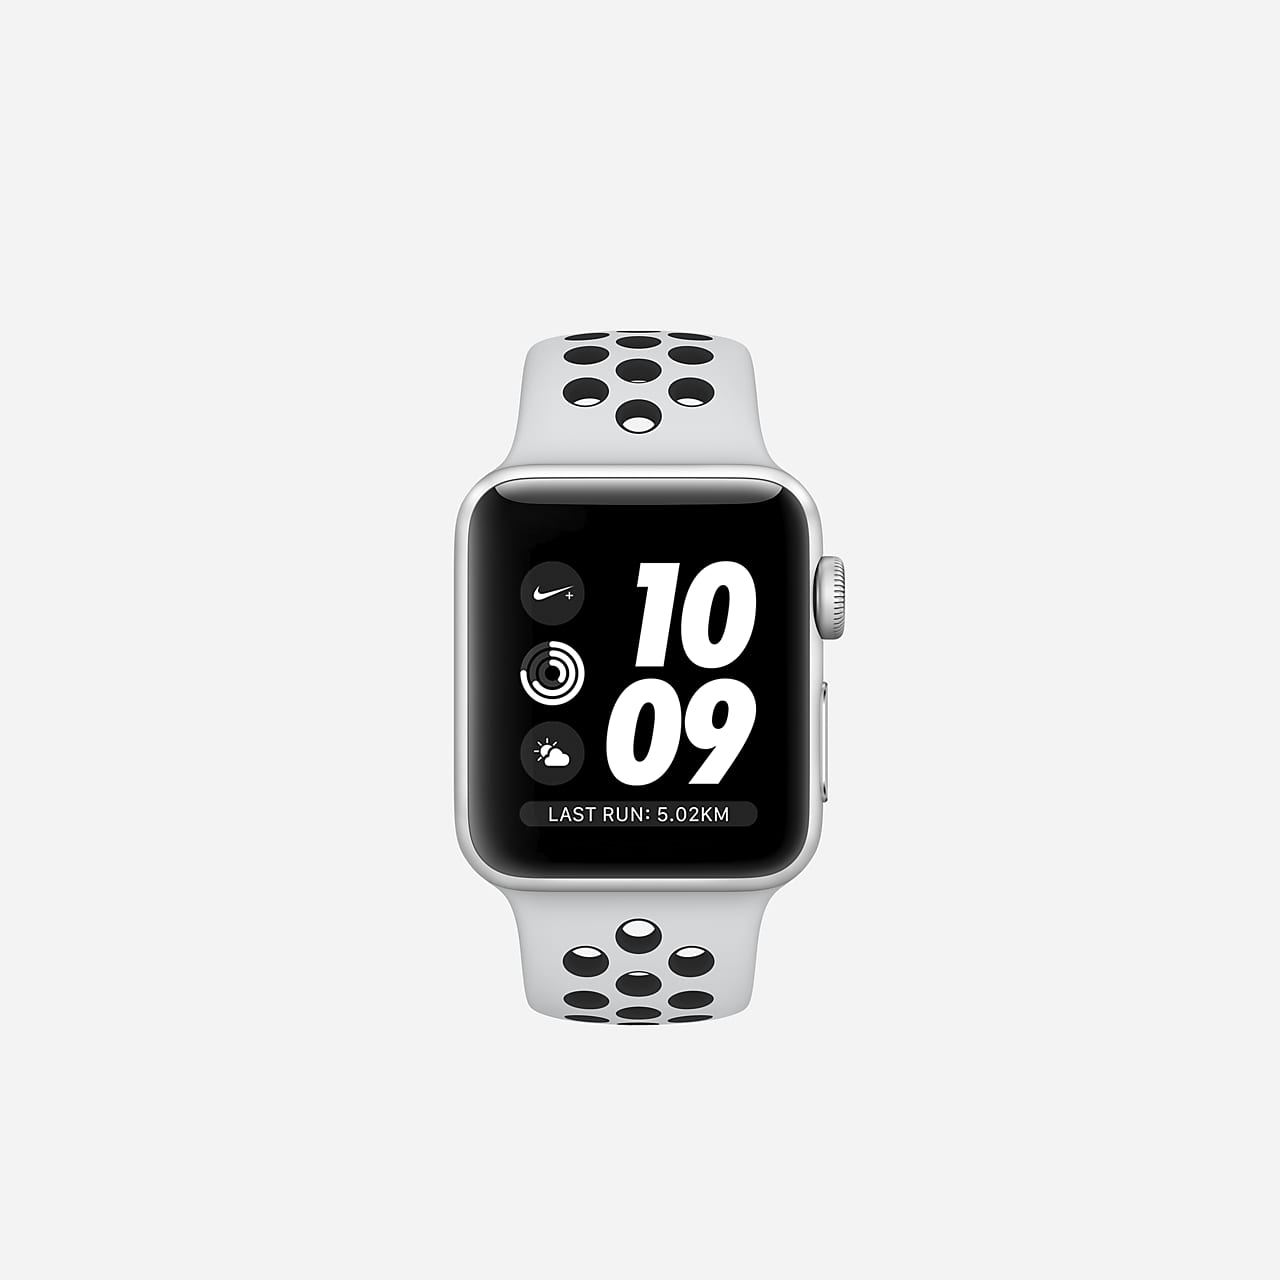 Apple Watch Nike+ GPS Series 3 (38mm) Open Box Running Watch